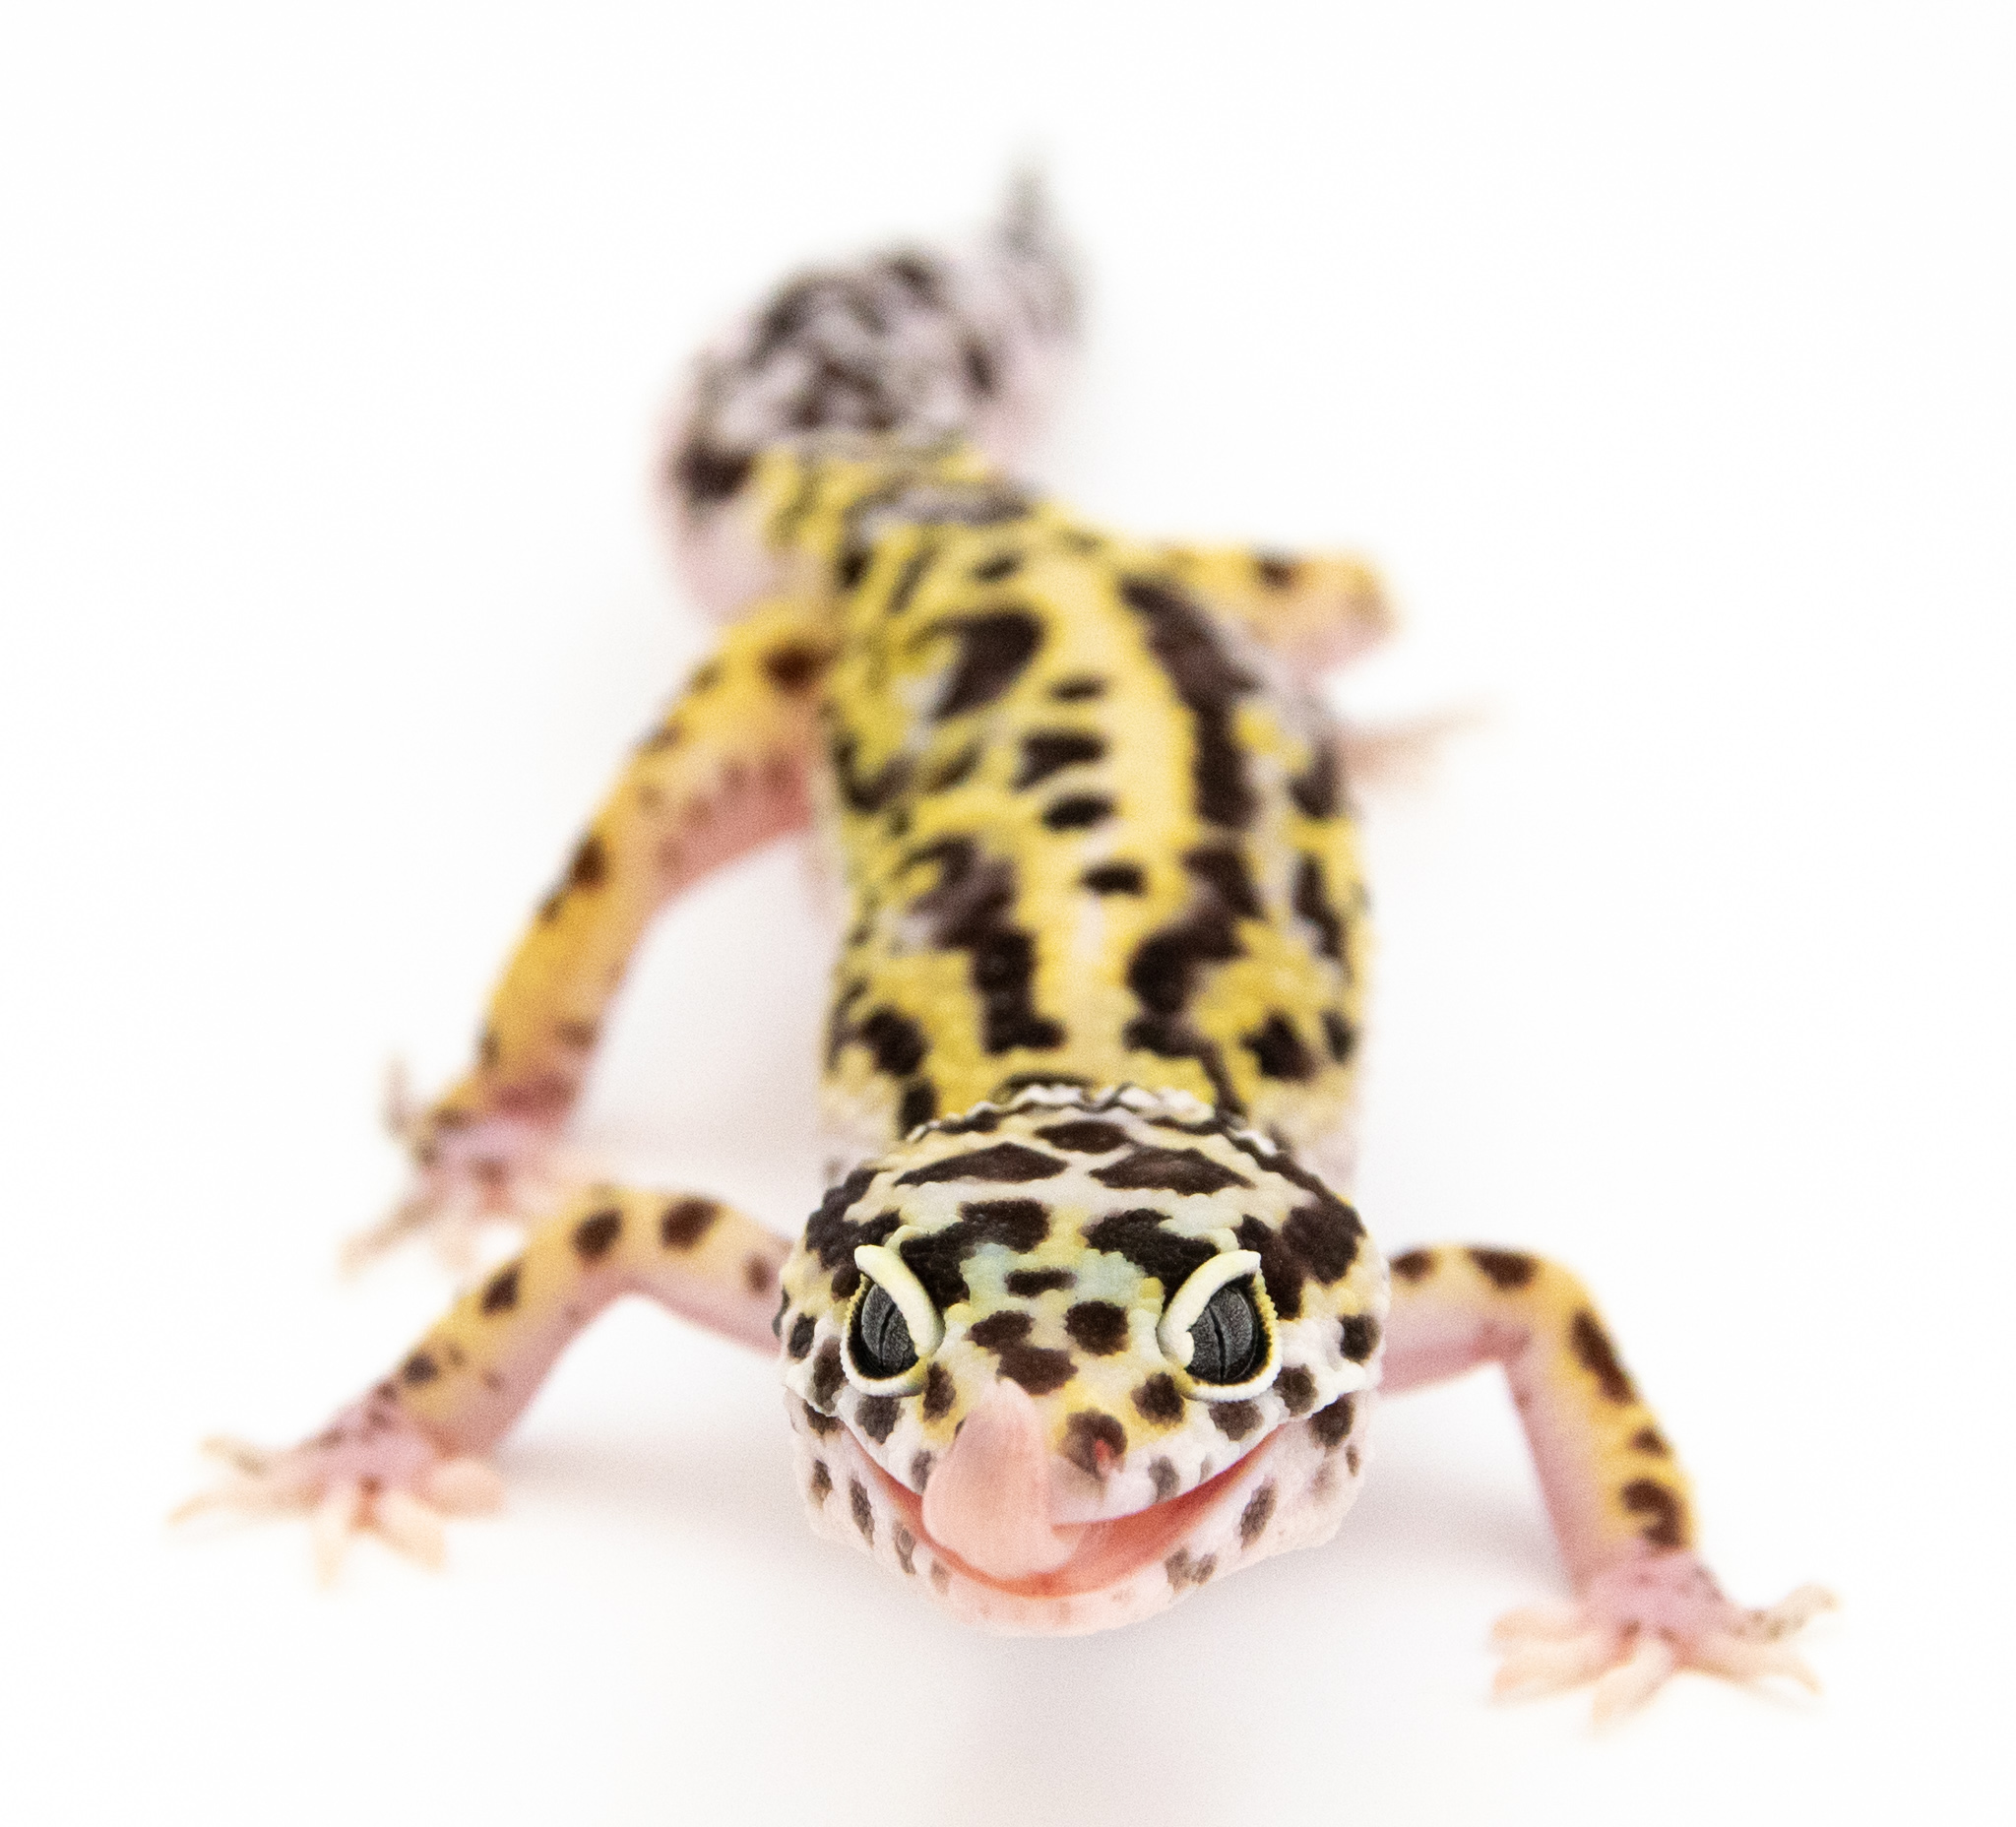 EJ142 - Gecko Léopard - Eublepharis Macularius Mack Snow het Bell - non sexé - NC 2021